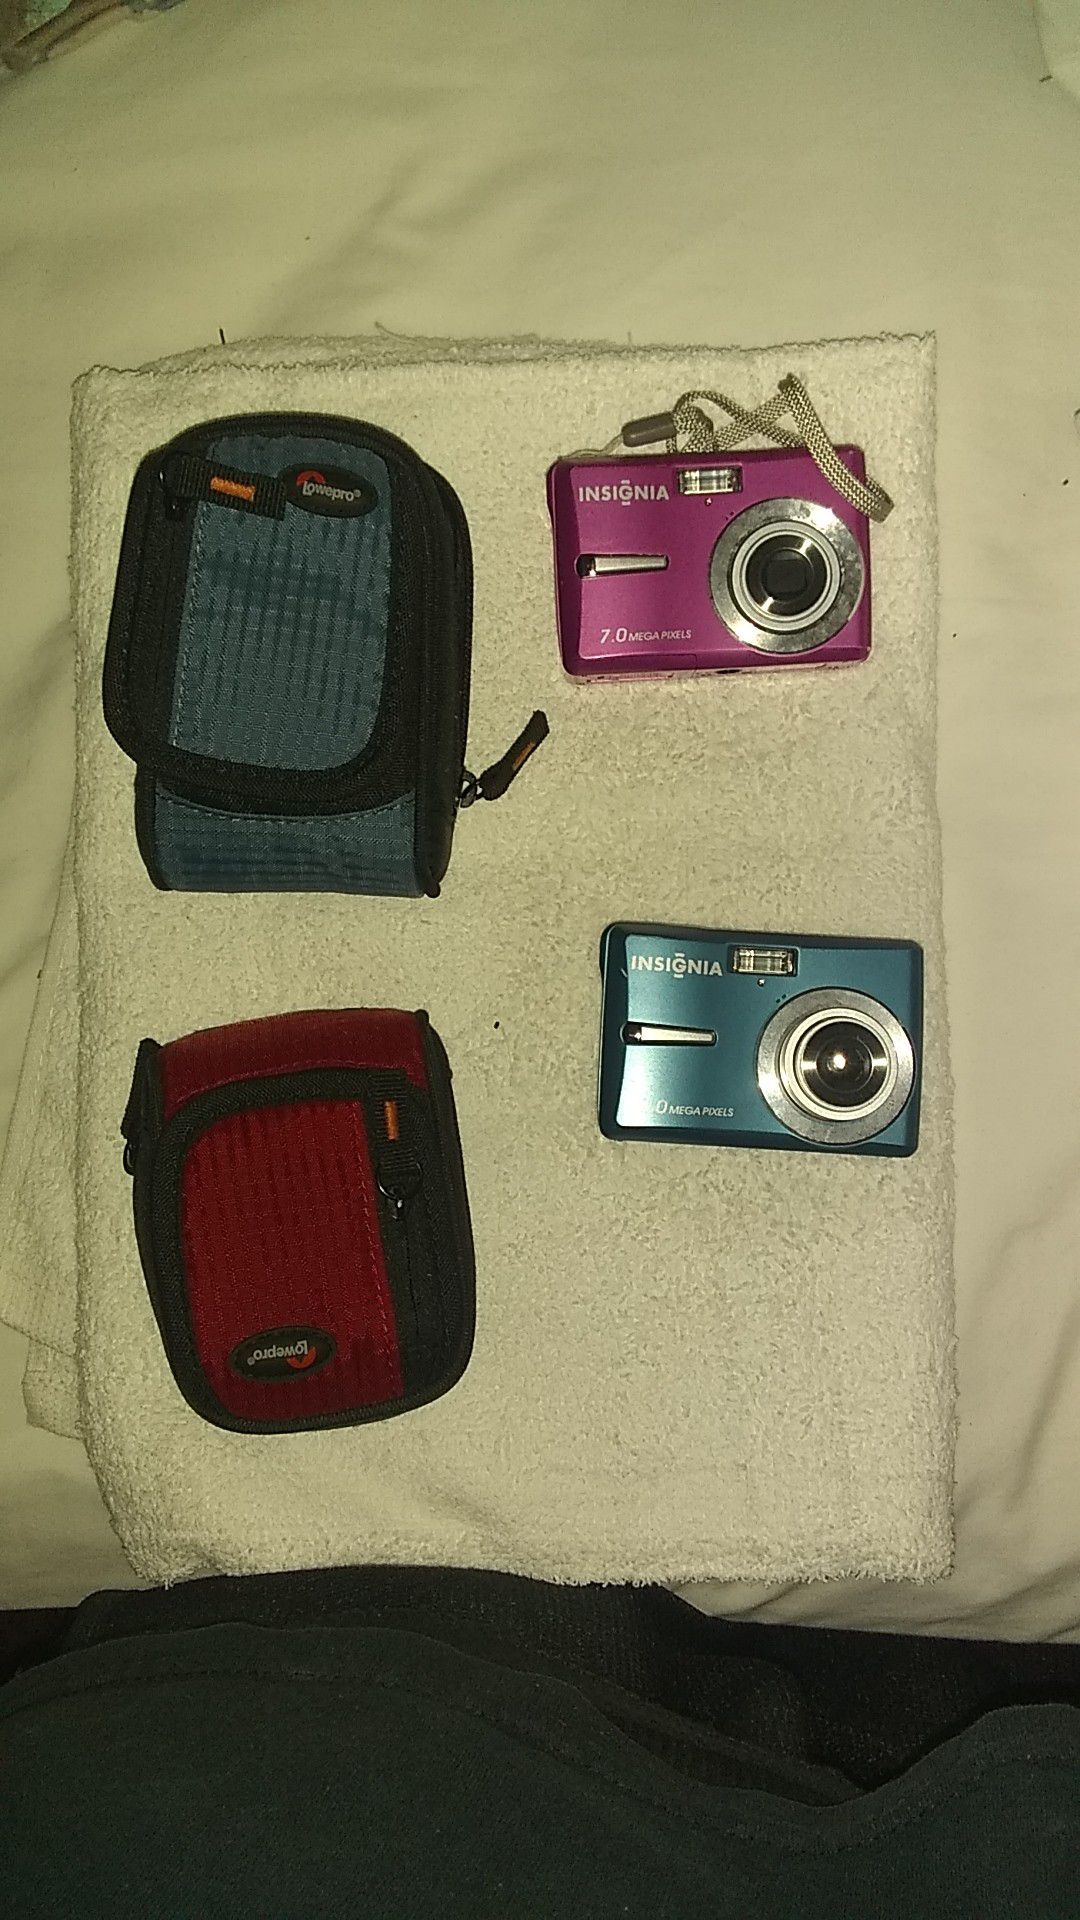 2 Insignia digital cameras with cases.